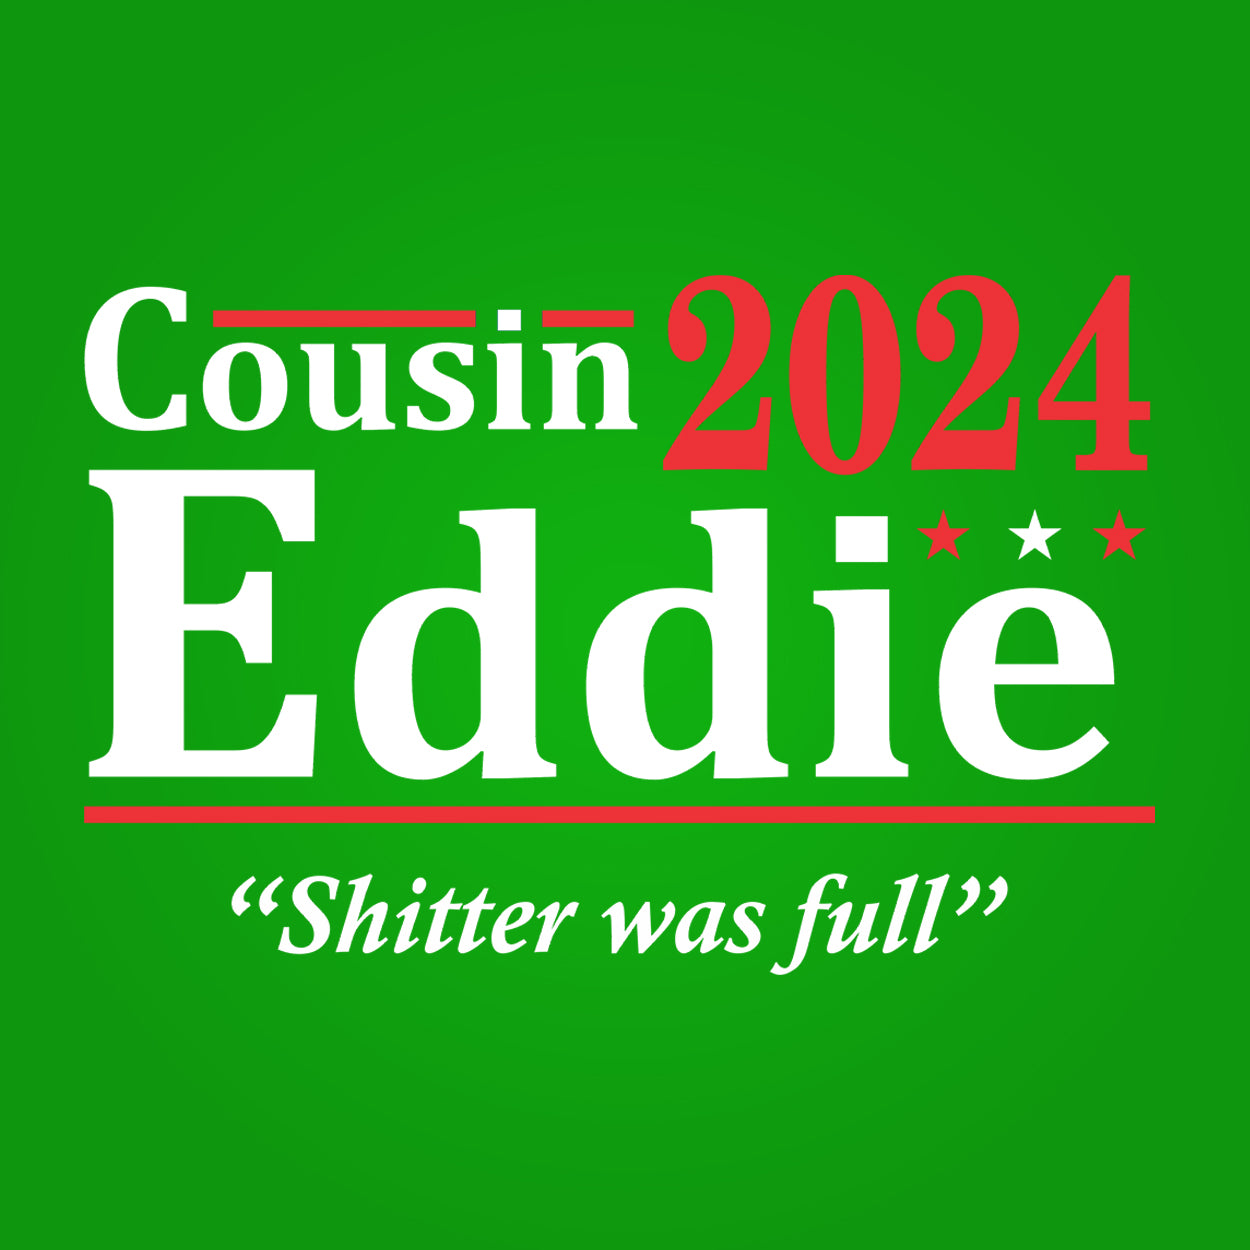 Cousin Eddie 2024 Election Tshirt - Donkey Tees